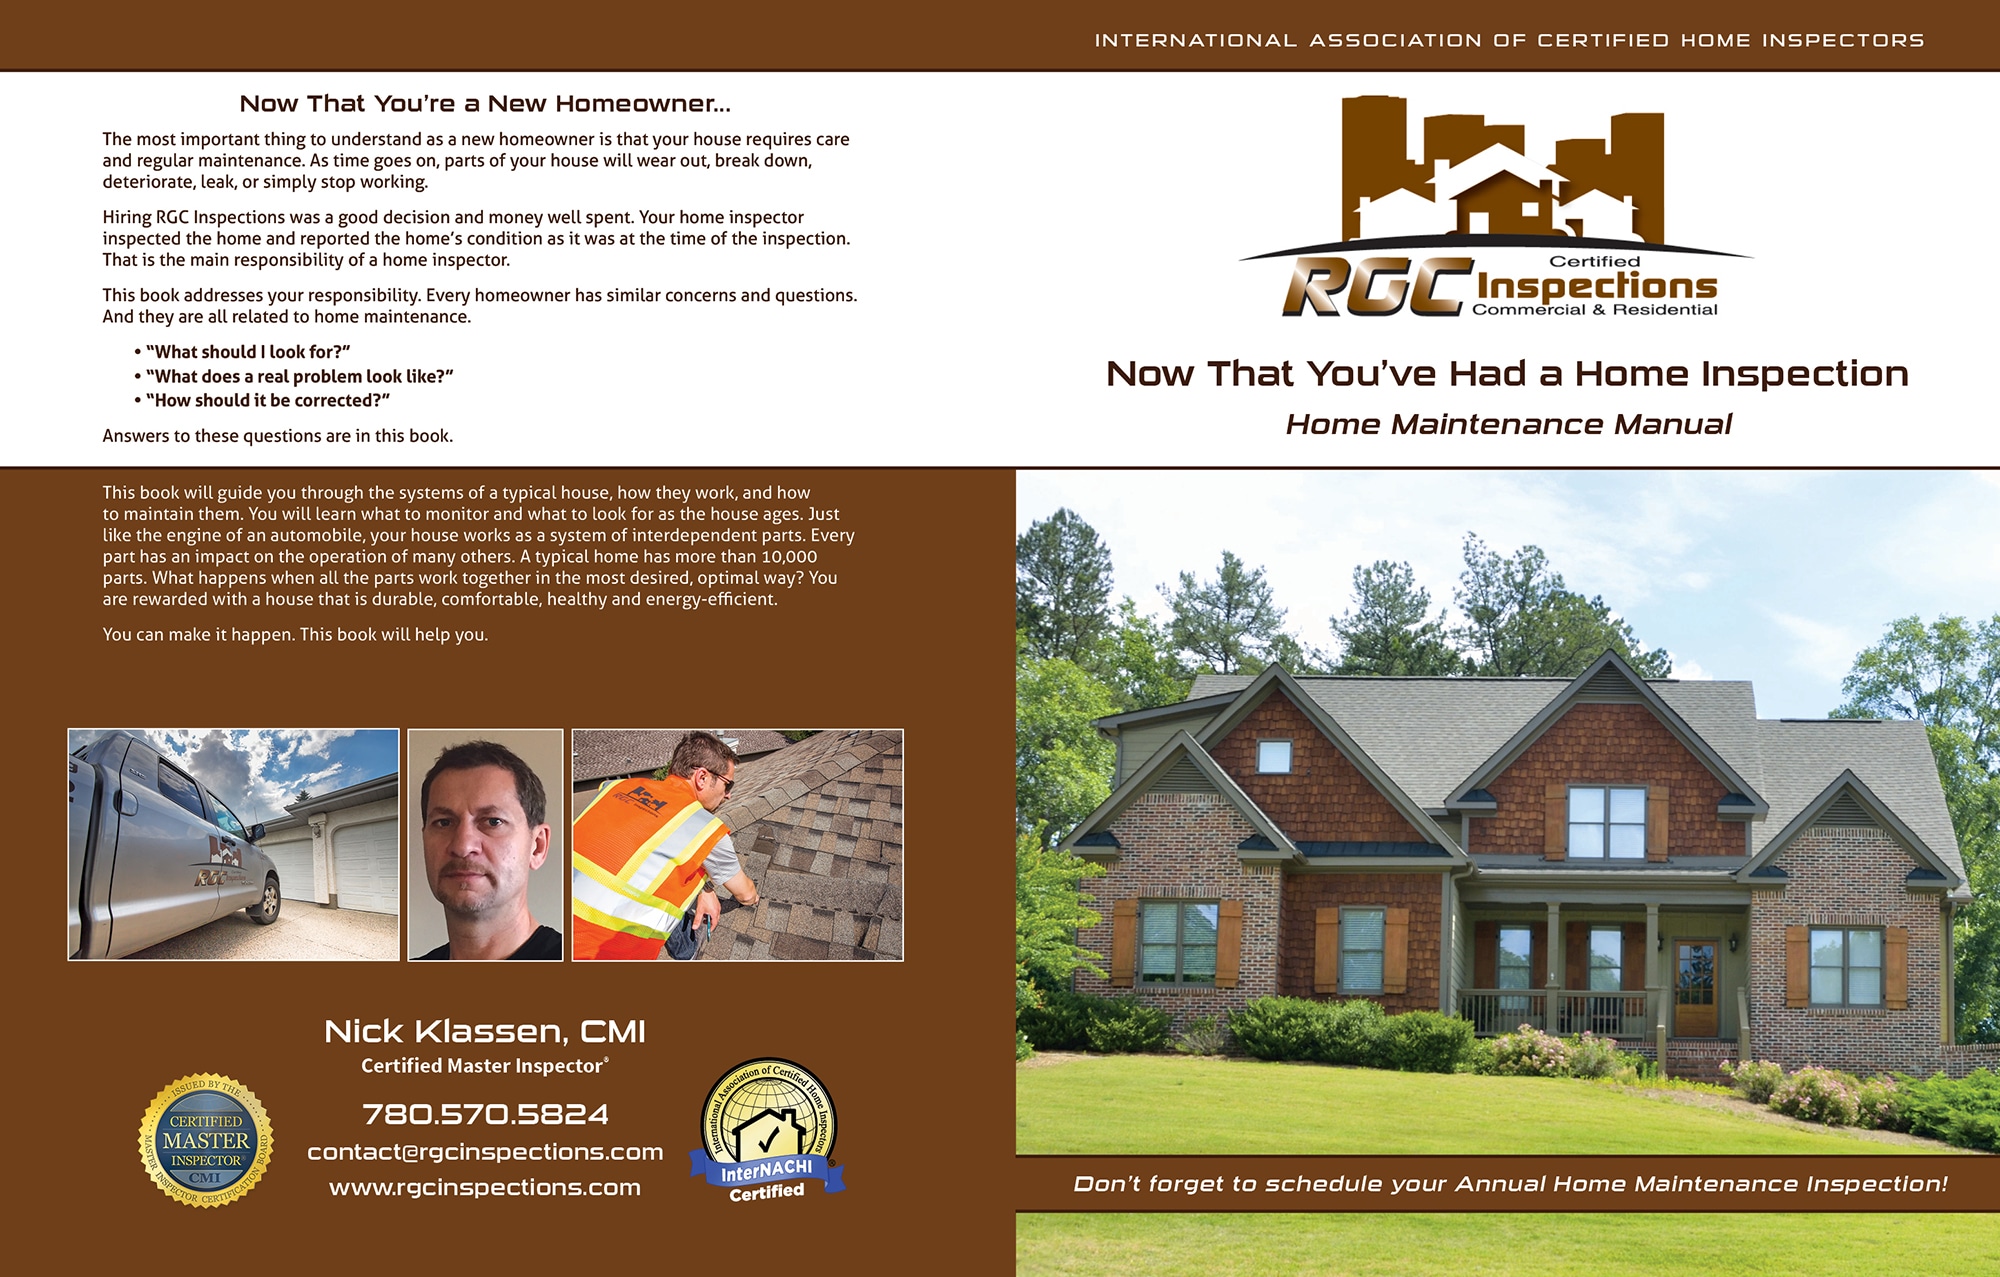 Custom Home Maintenance Book for RCC Inspections.